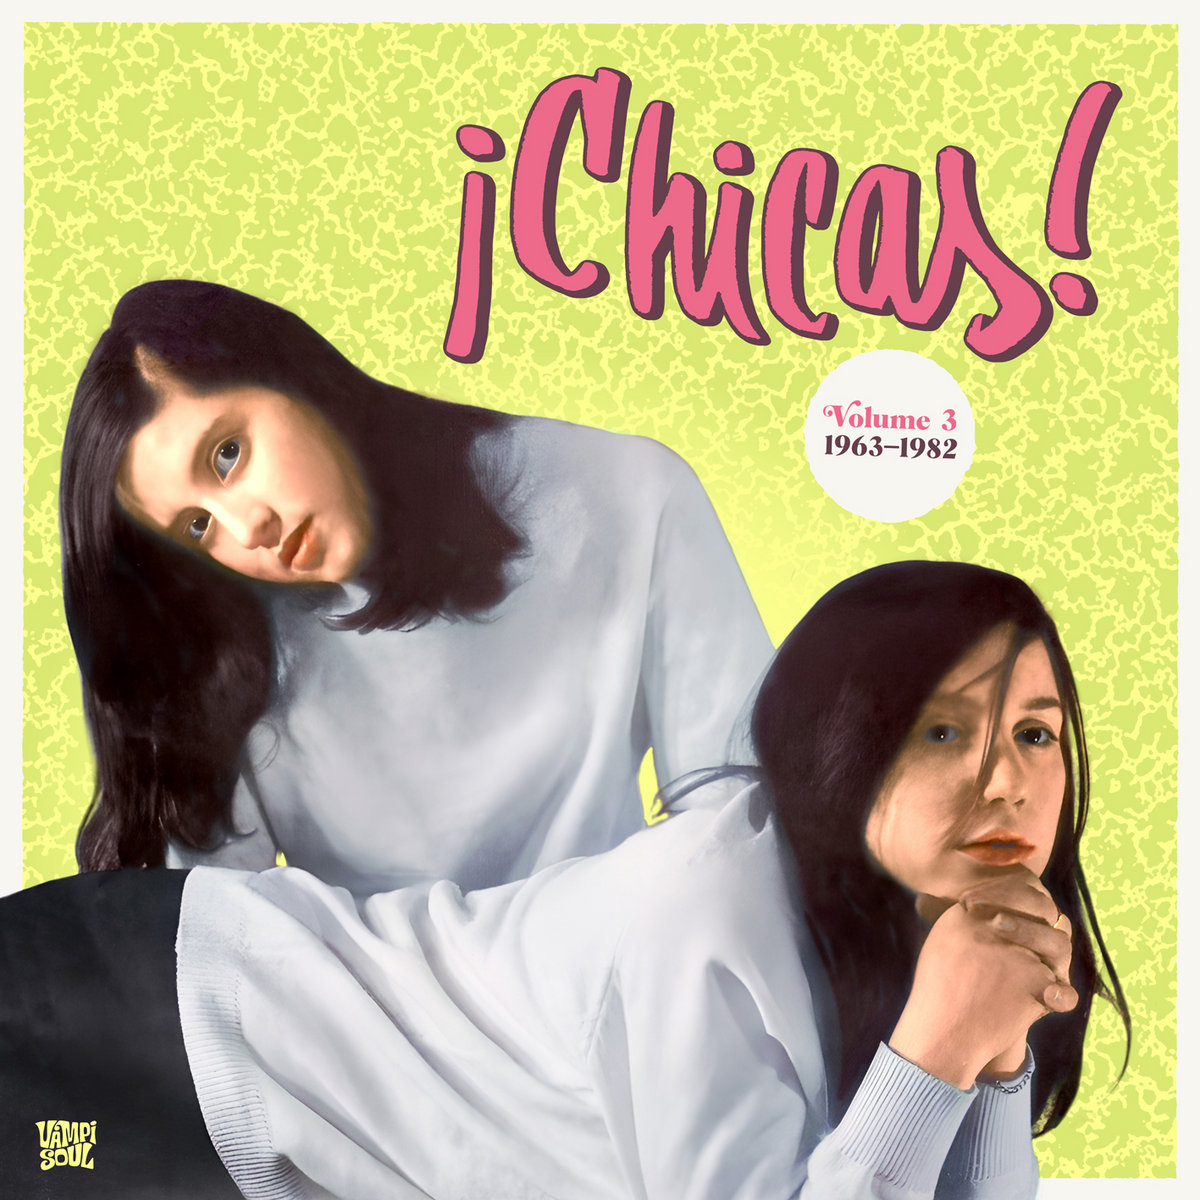 ¡CHICAS! Volume 3 1963-1982